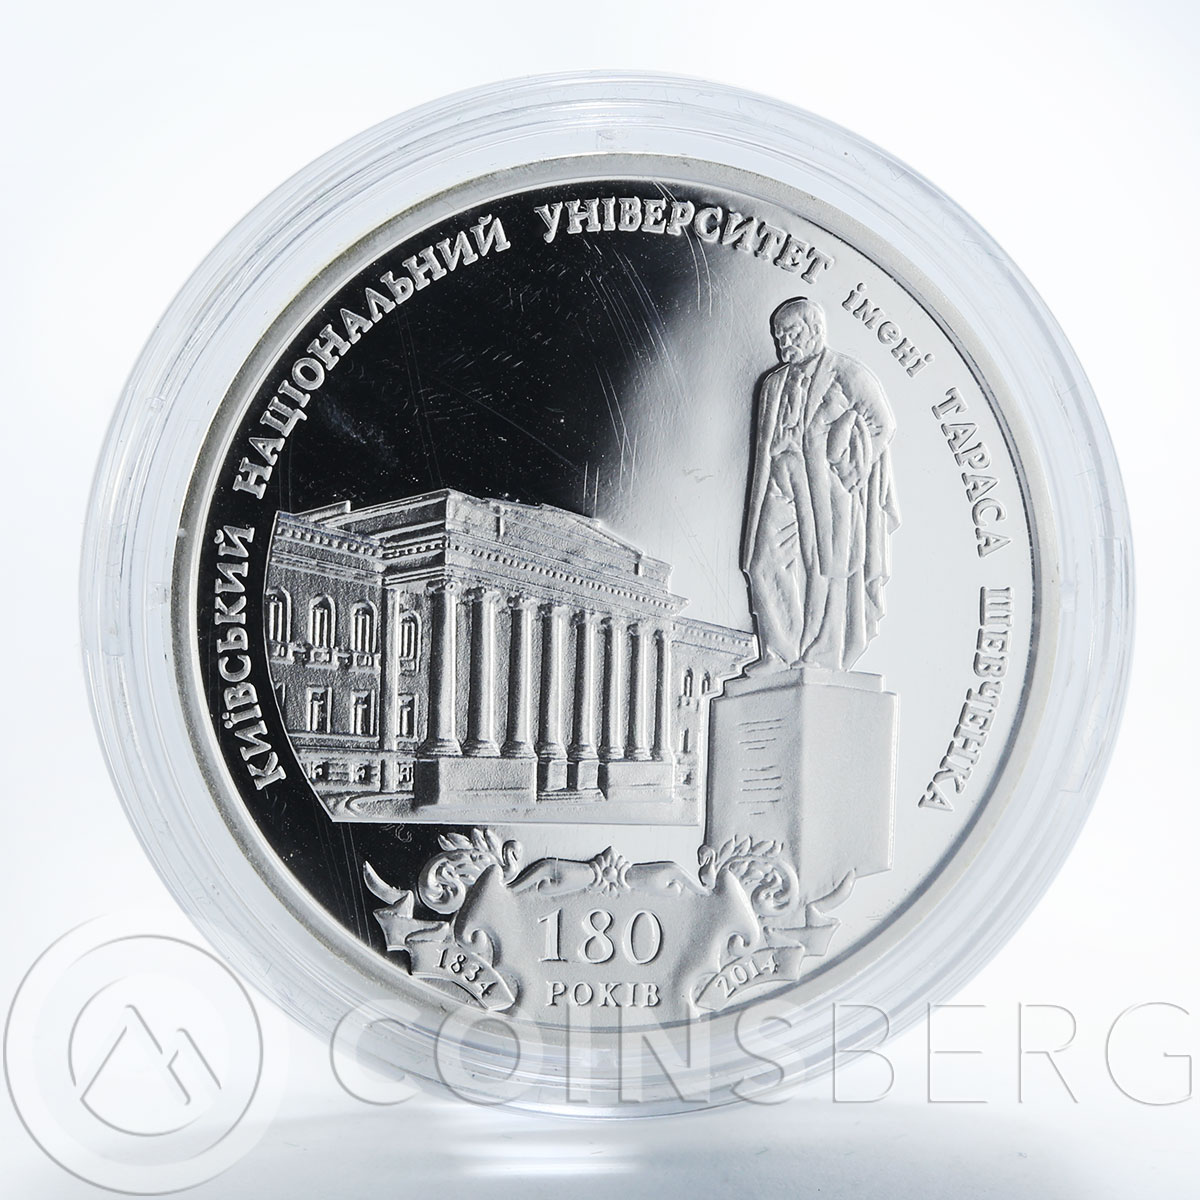 Ukraine 5 hryvnia 180 Year Taras Shevchenko National University silver coin 2014